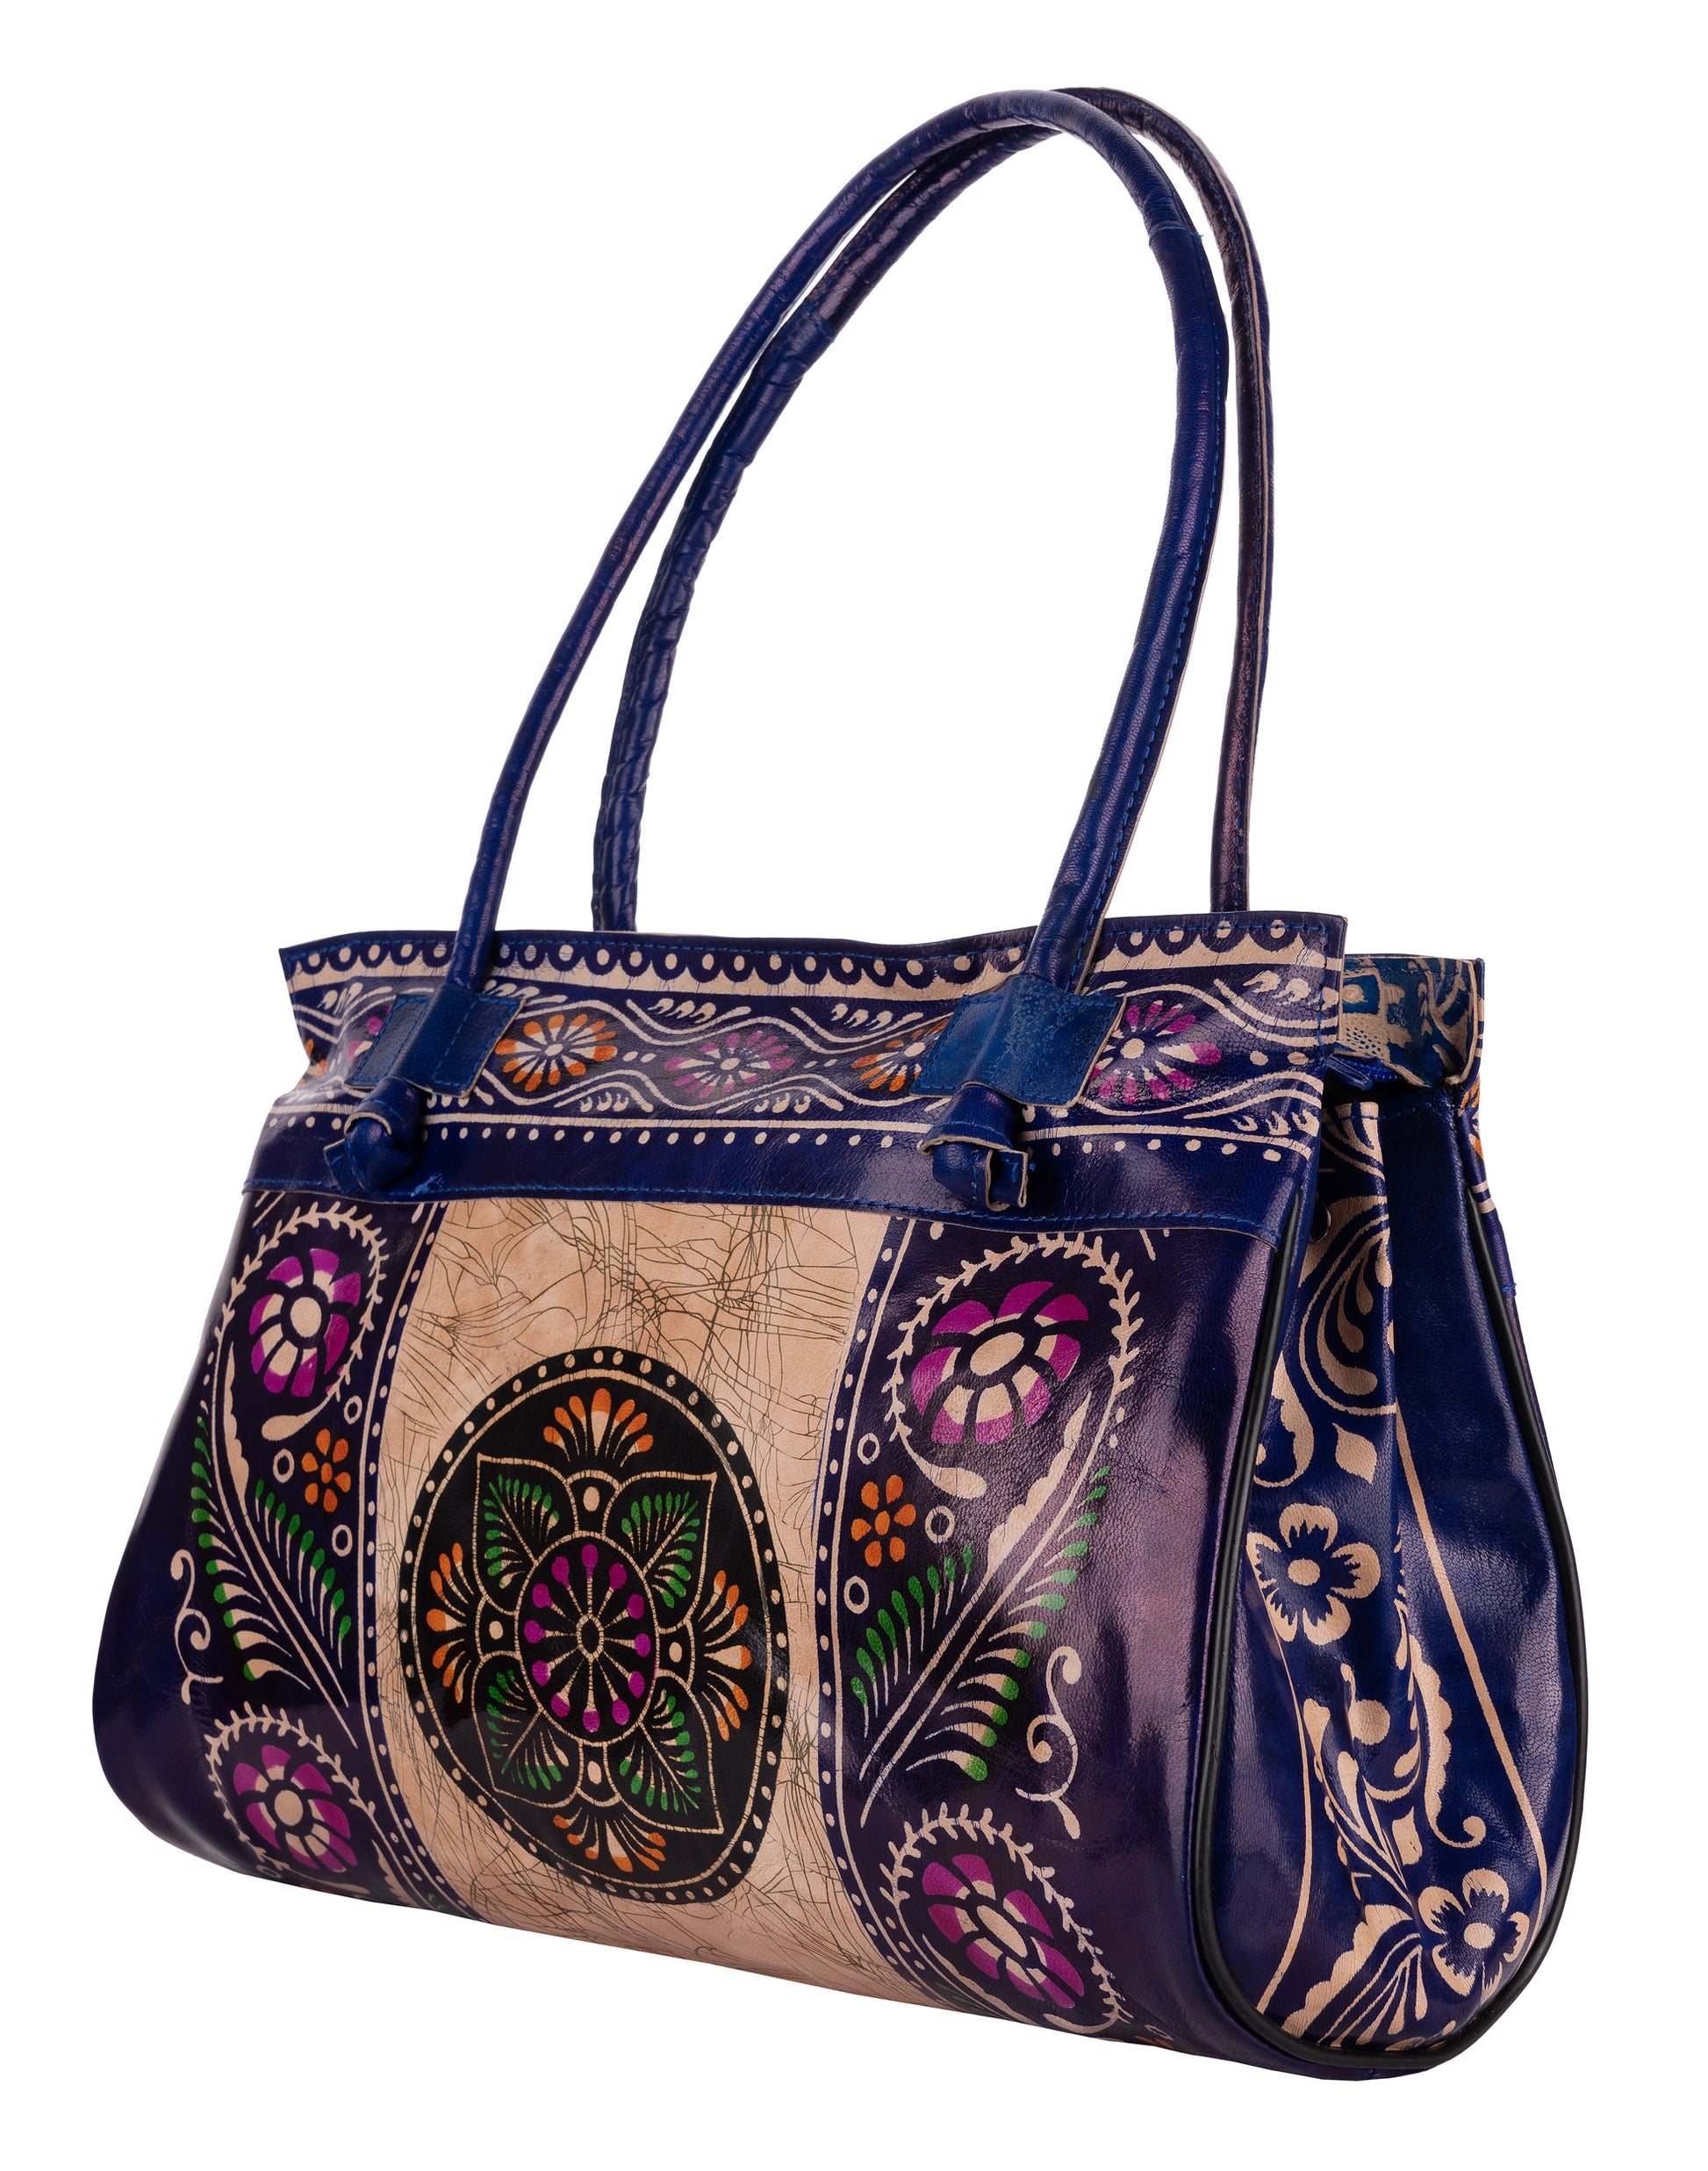 shantiniketan-leather-traditional-printed-brown-handbag-15-12-for-women-hb13